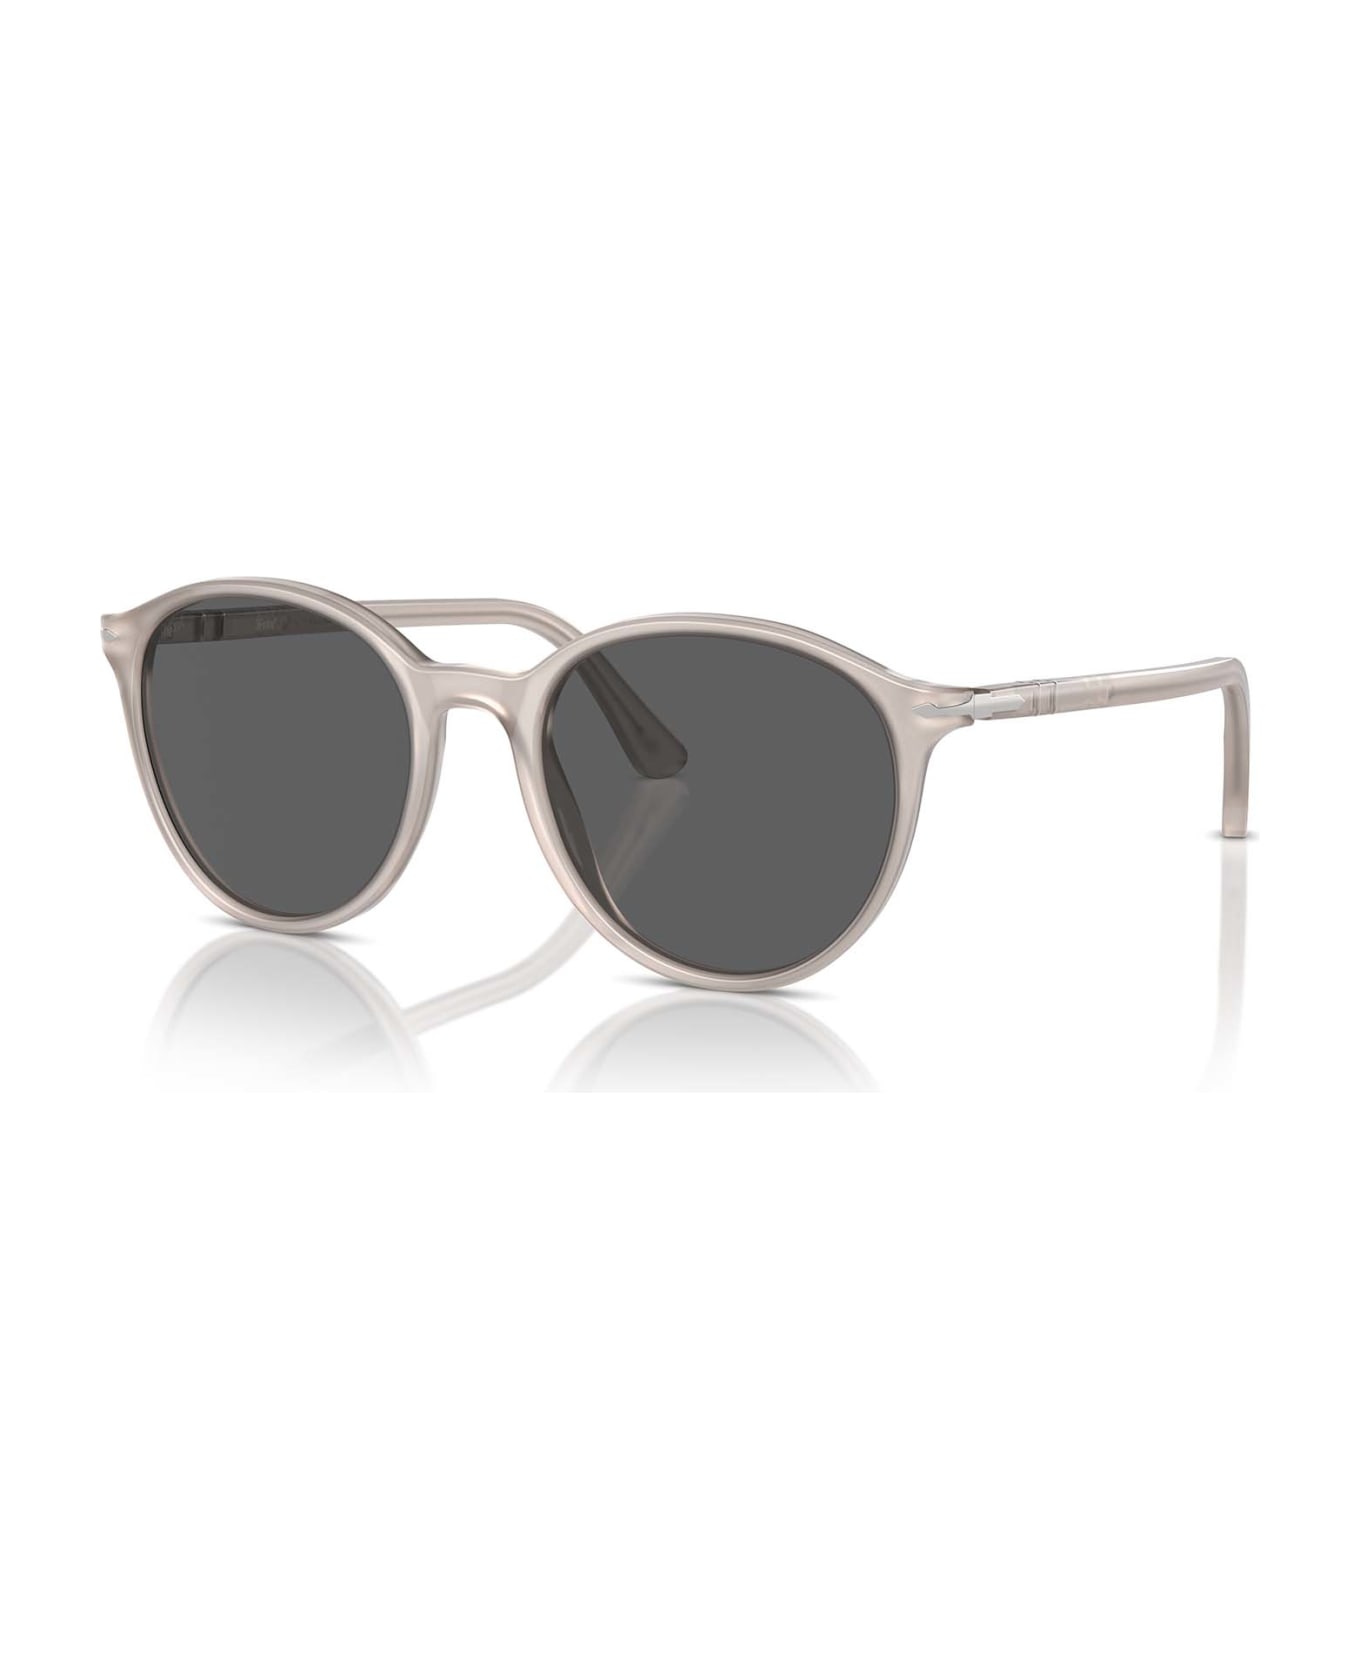 Persol Po3350s Opal Grey Sunglasses - Opal Grey